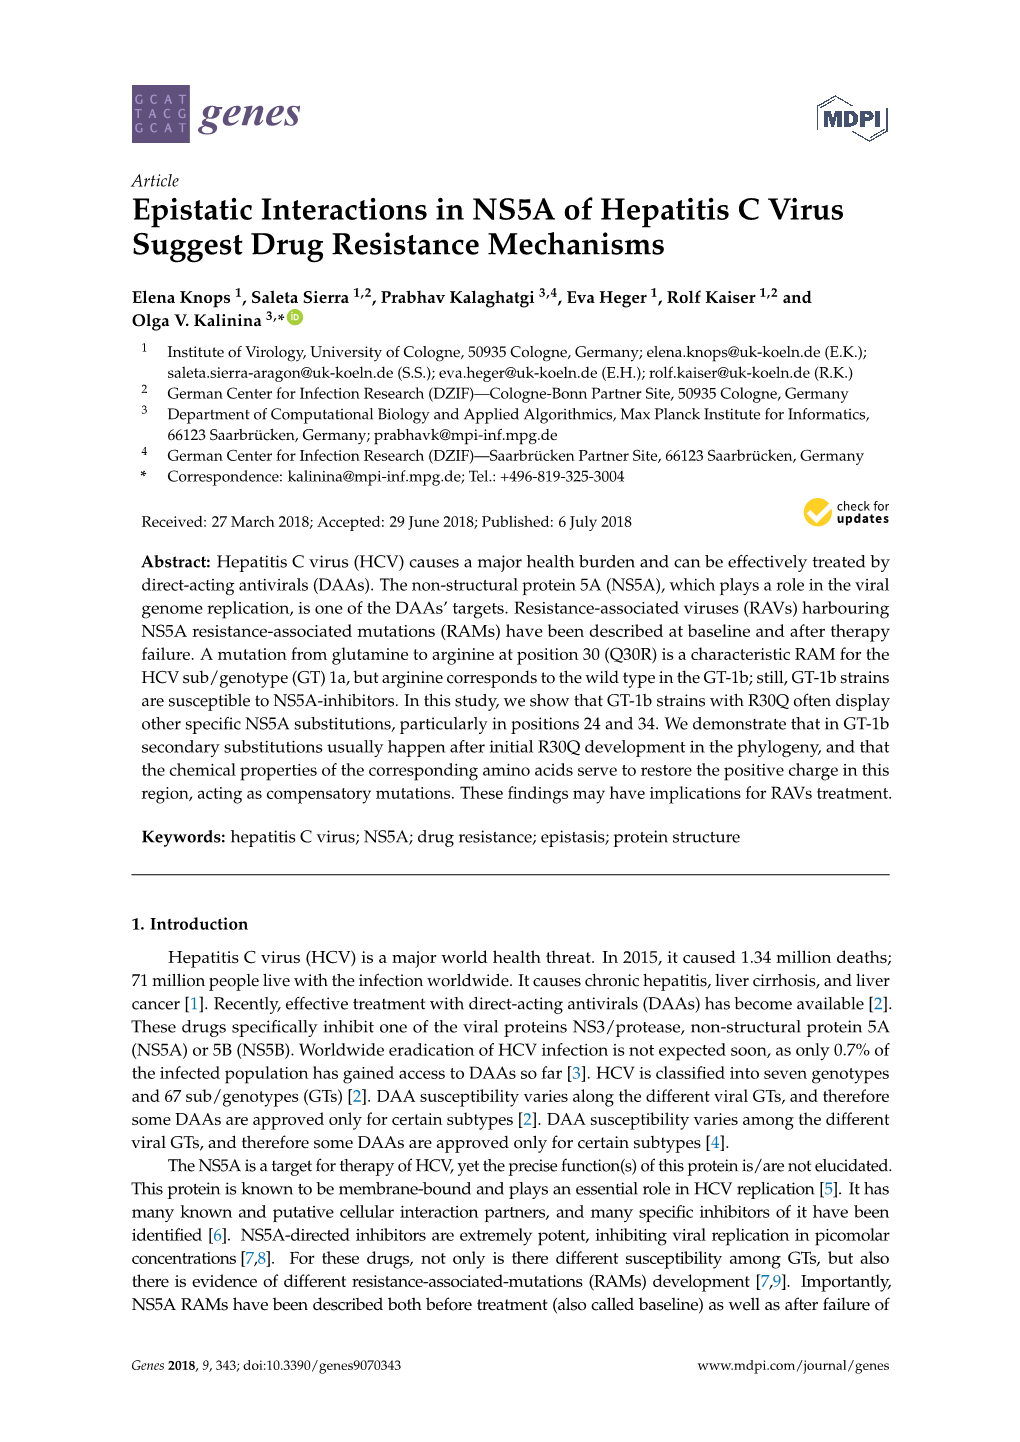 Epistatic Interactions in NS5A of Hepatitis C Virus Suggest Drug Resistance Mechanisms